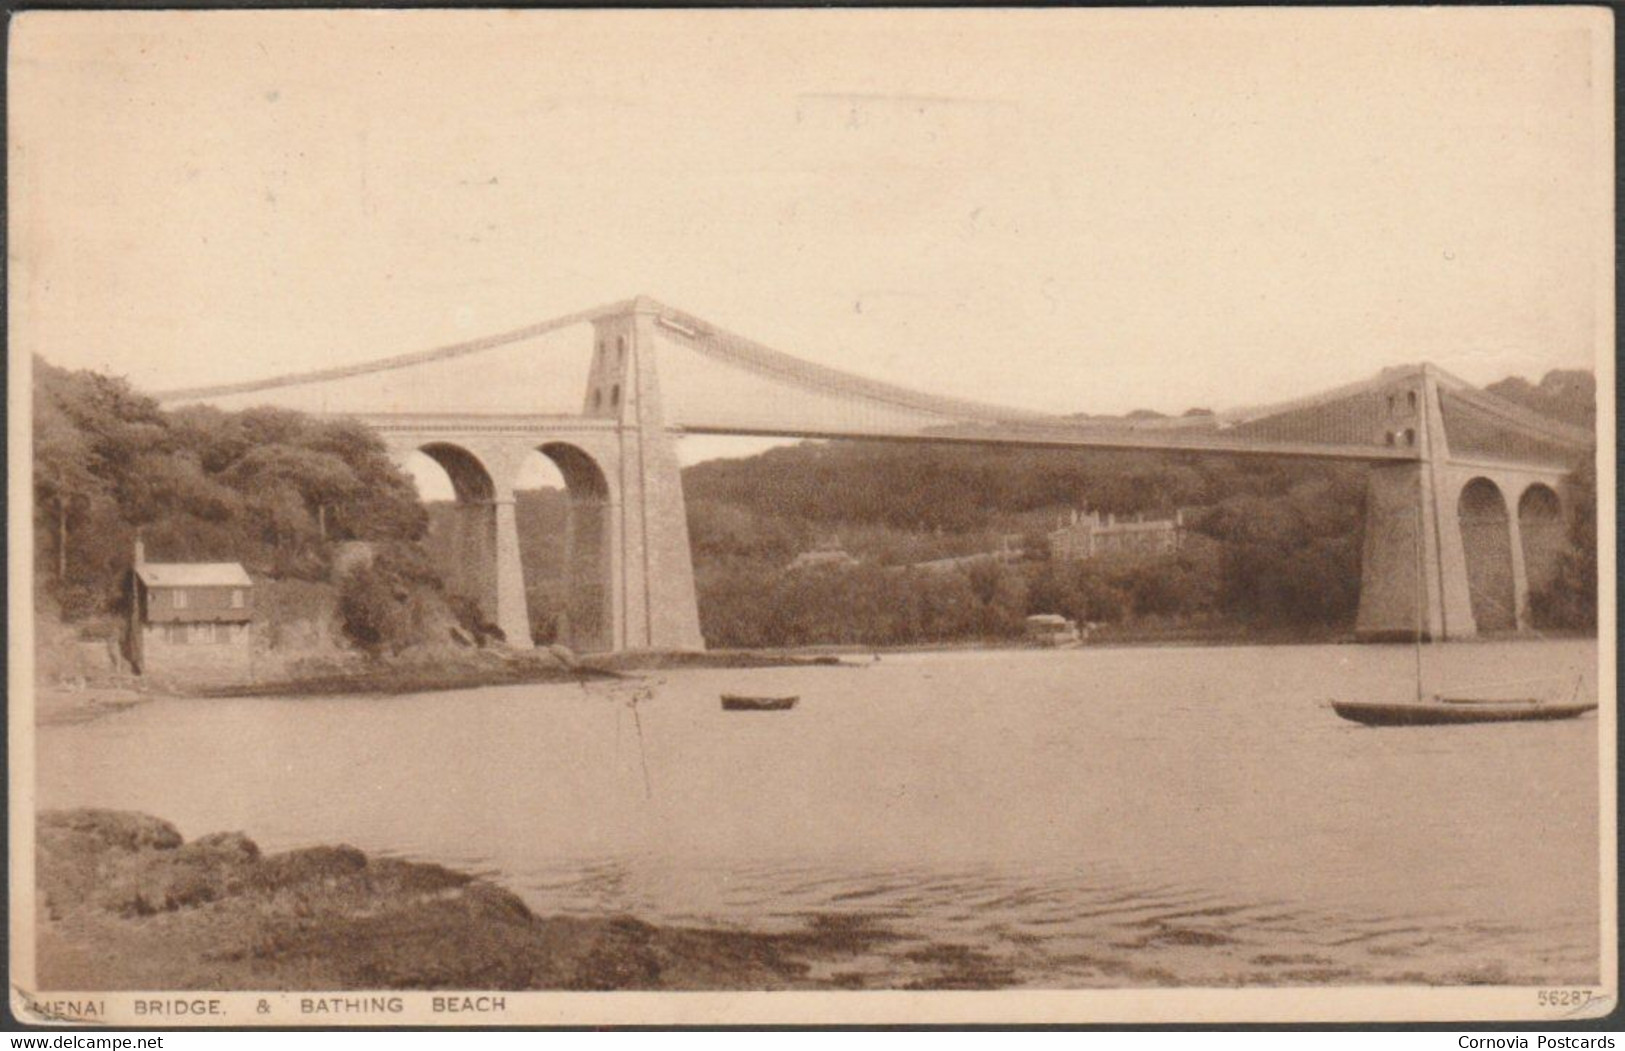 Menai Bridge & Bathing Beach, Anglesey, 1928 - Photochrom Postcard - Anglesey